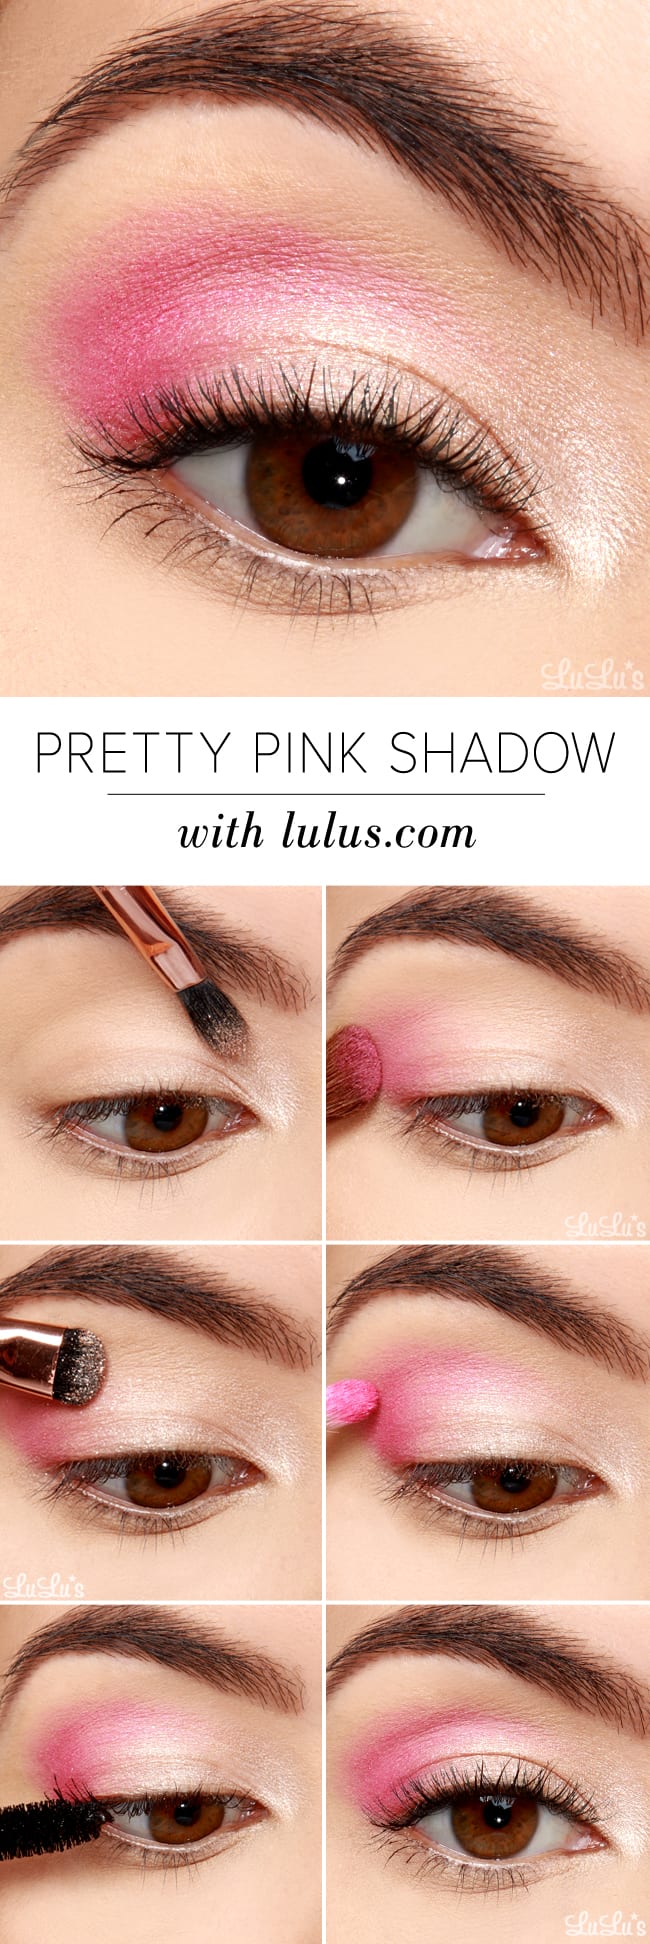 Lulus How-To: Pretty Pink Eyeshadow Tutorial - Lulus.com Fashion Blog